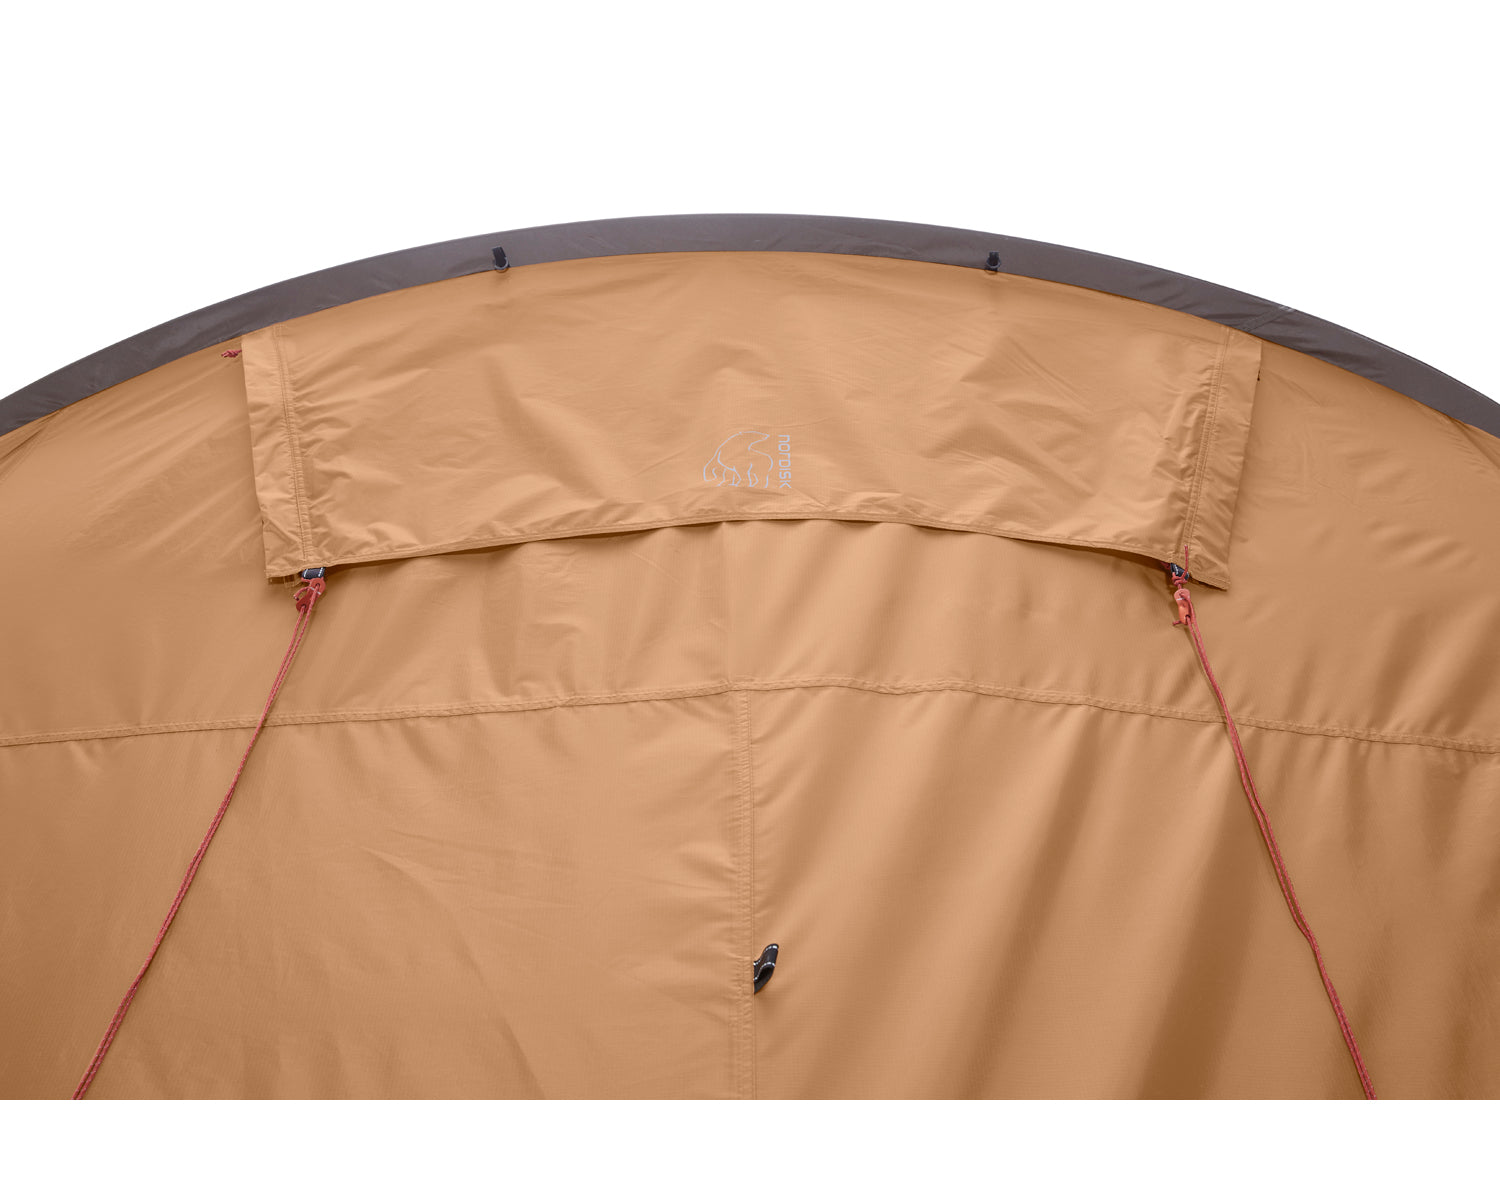 Reisa 4 PU tent - 4 person - Cashew/Brown